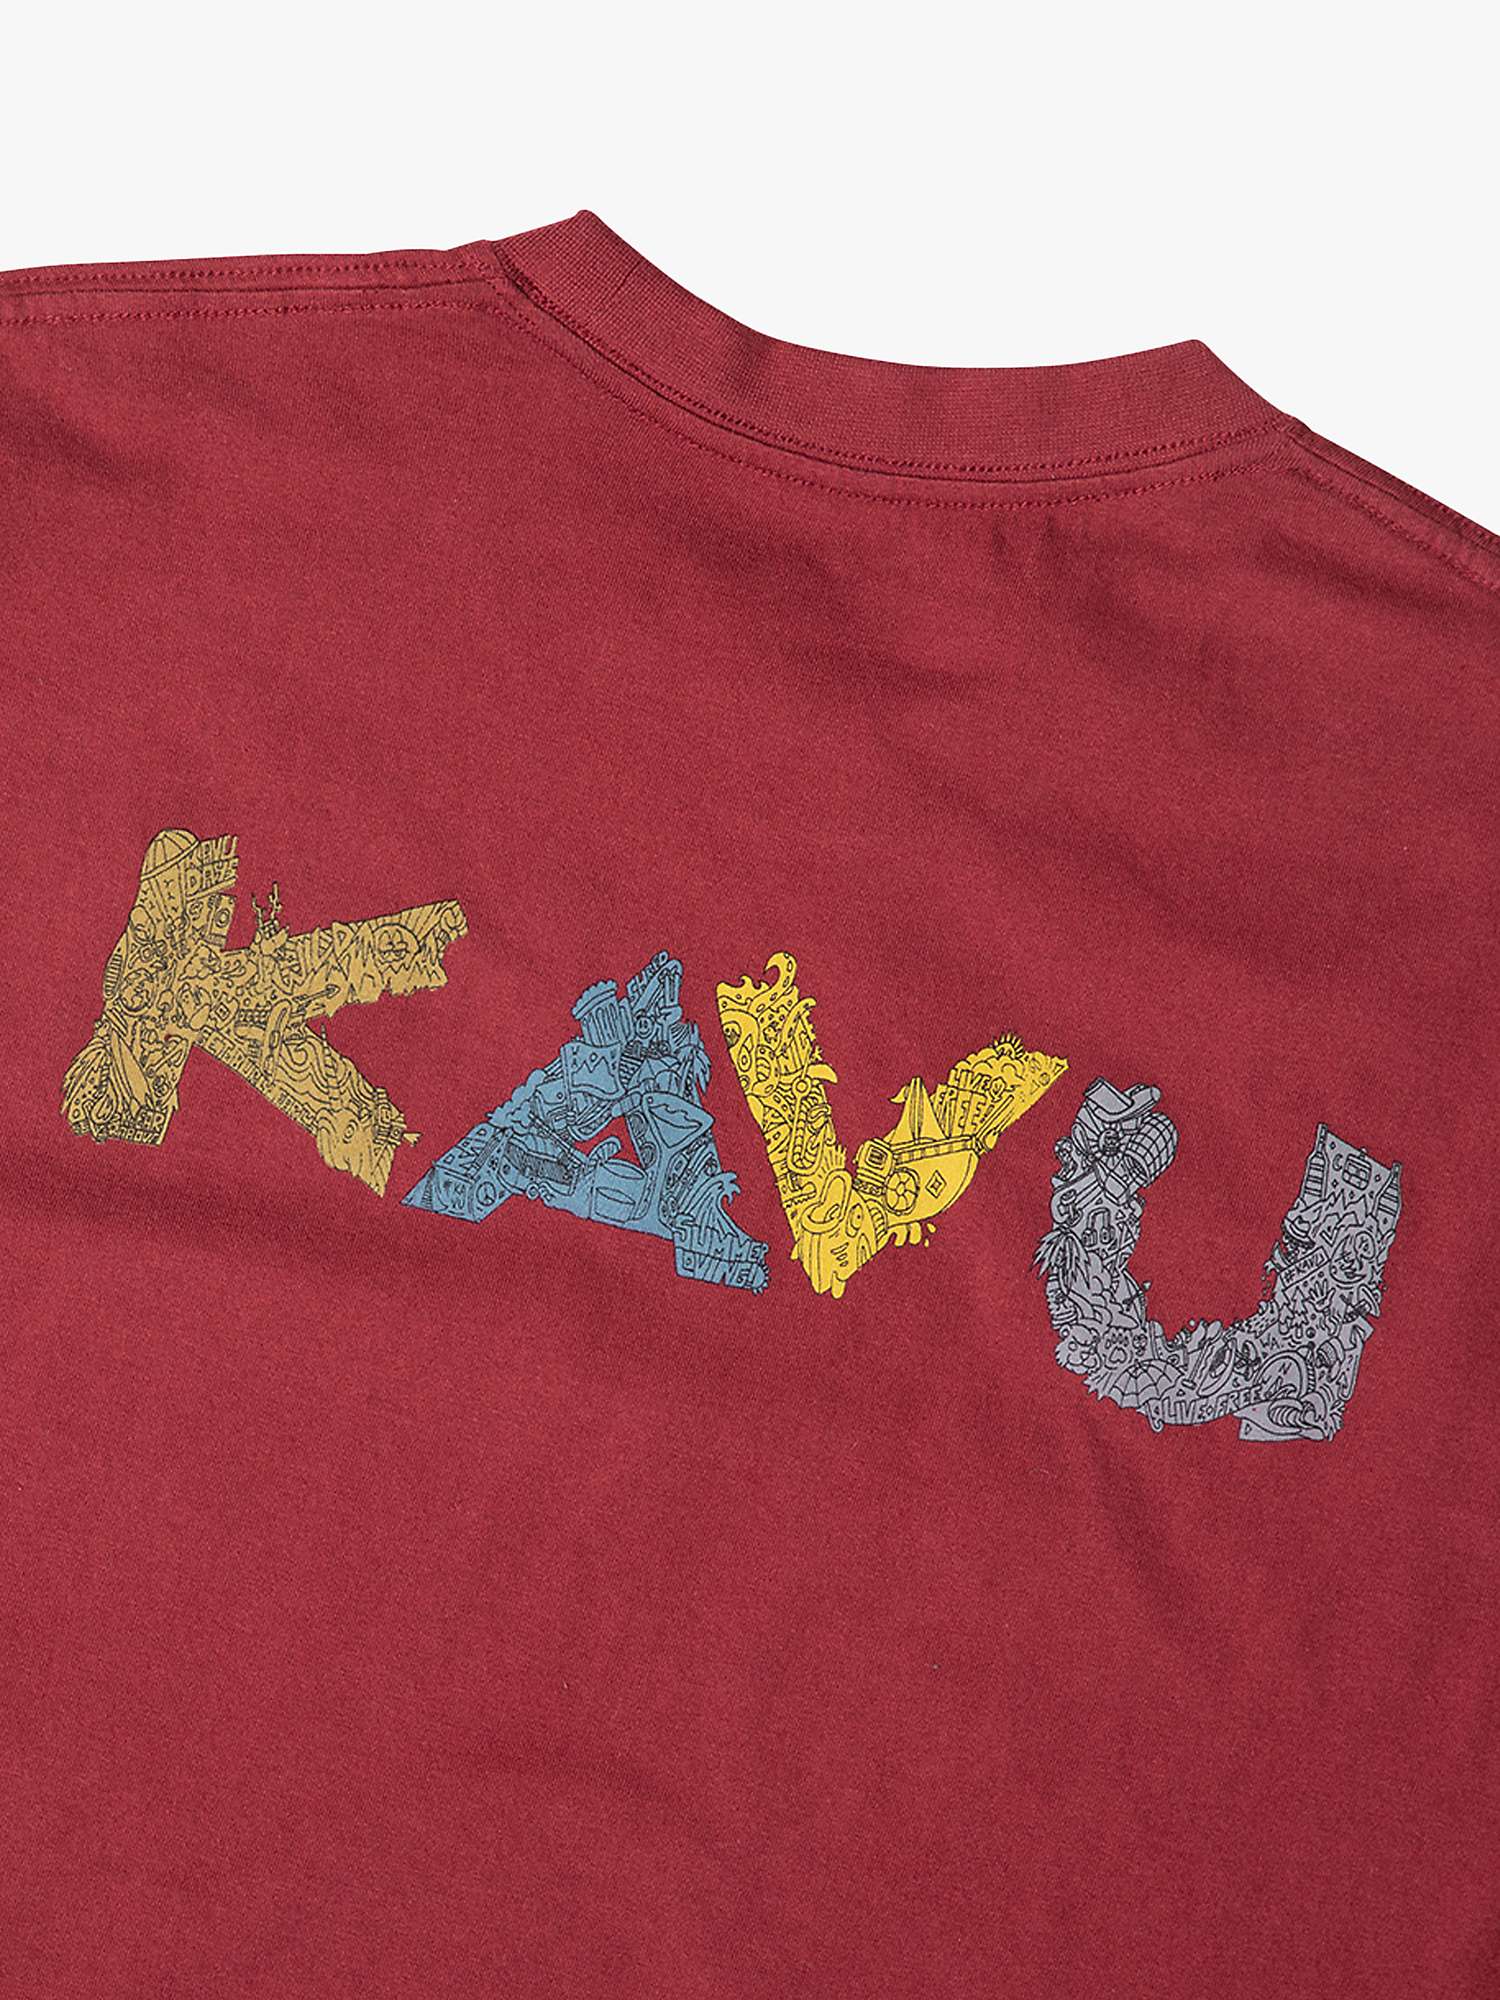 Buy KAVU Doddle Days Organic Cotton Short Sleeve T-Shirt, Port Online at johnlewis.com